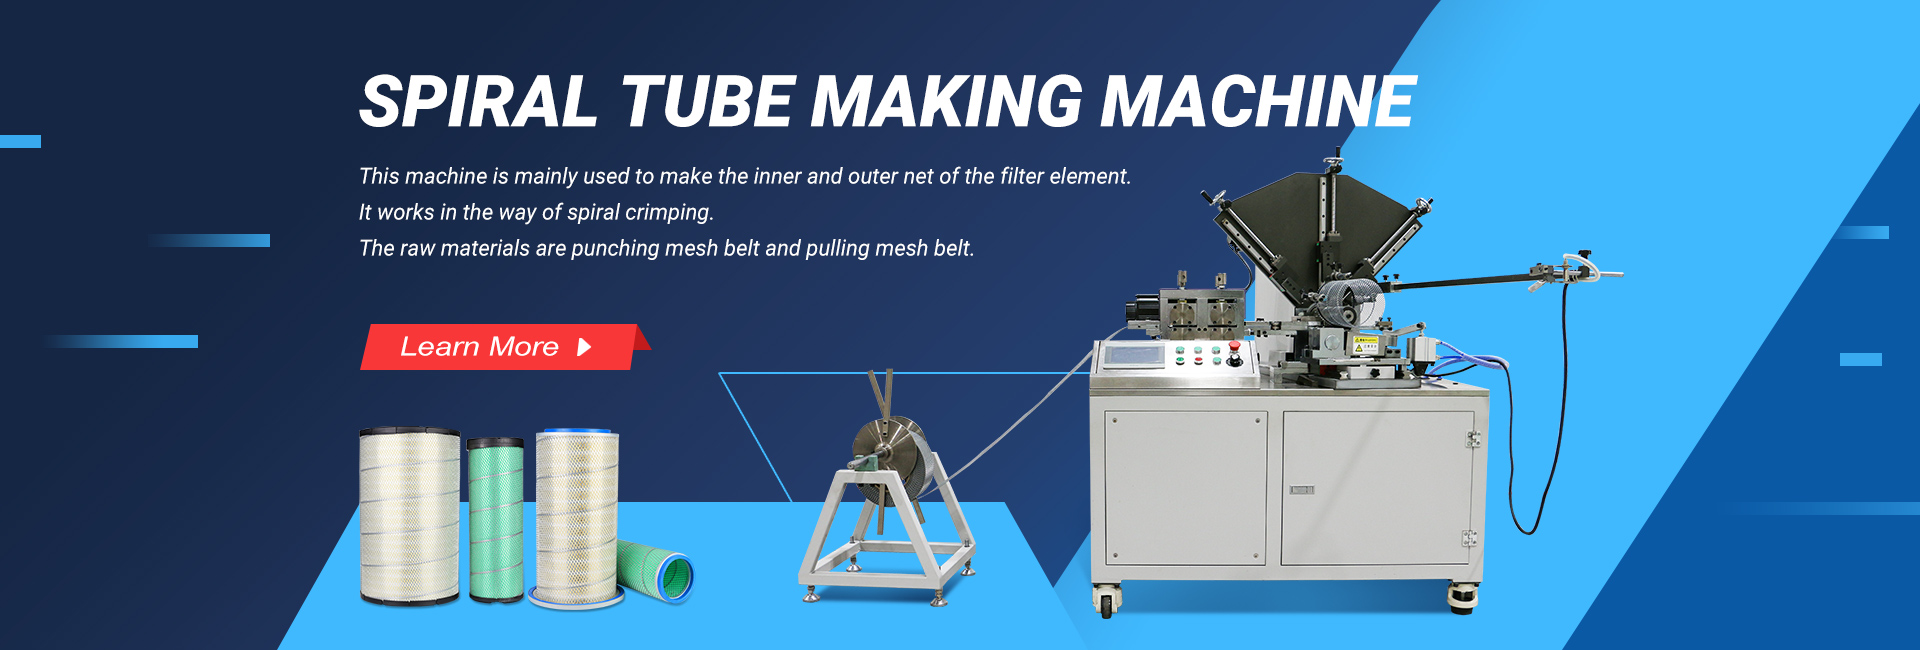 Spiral Tube Making Machine